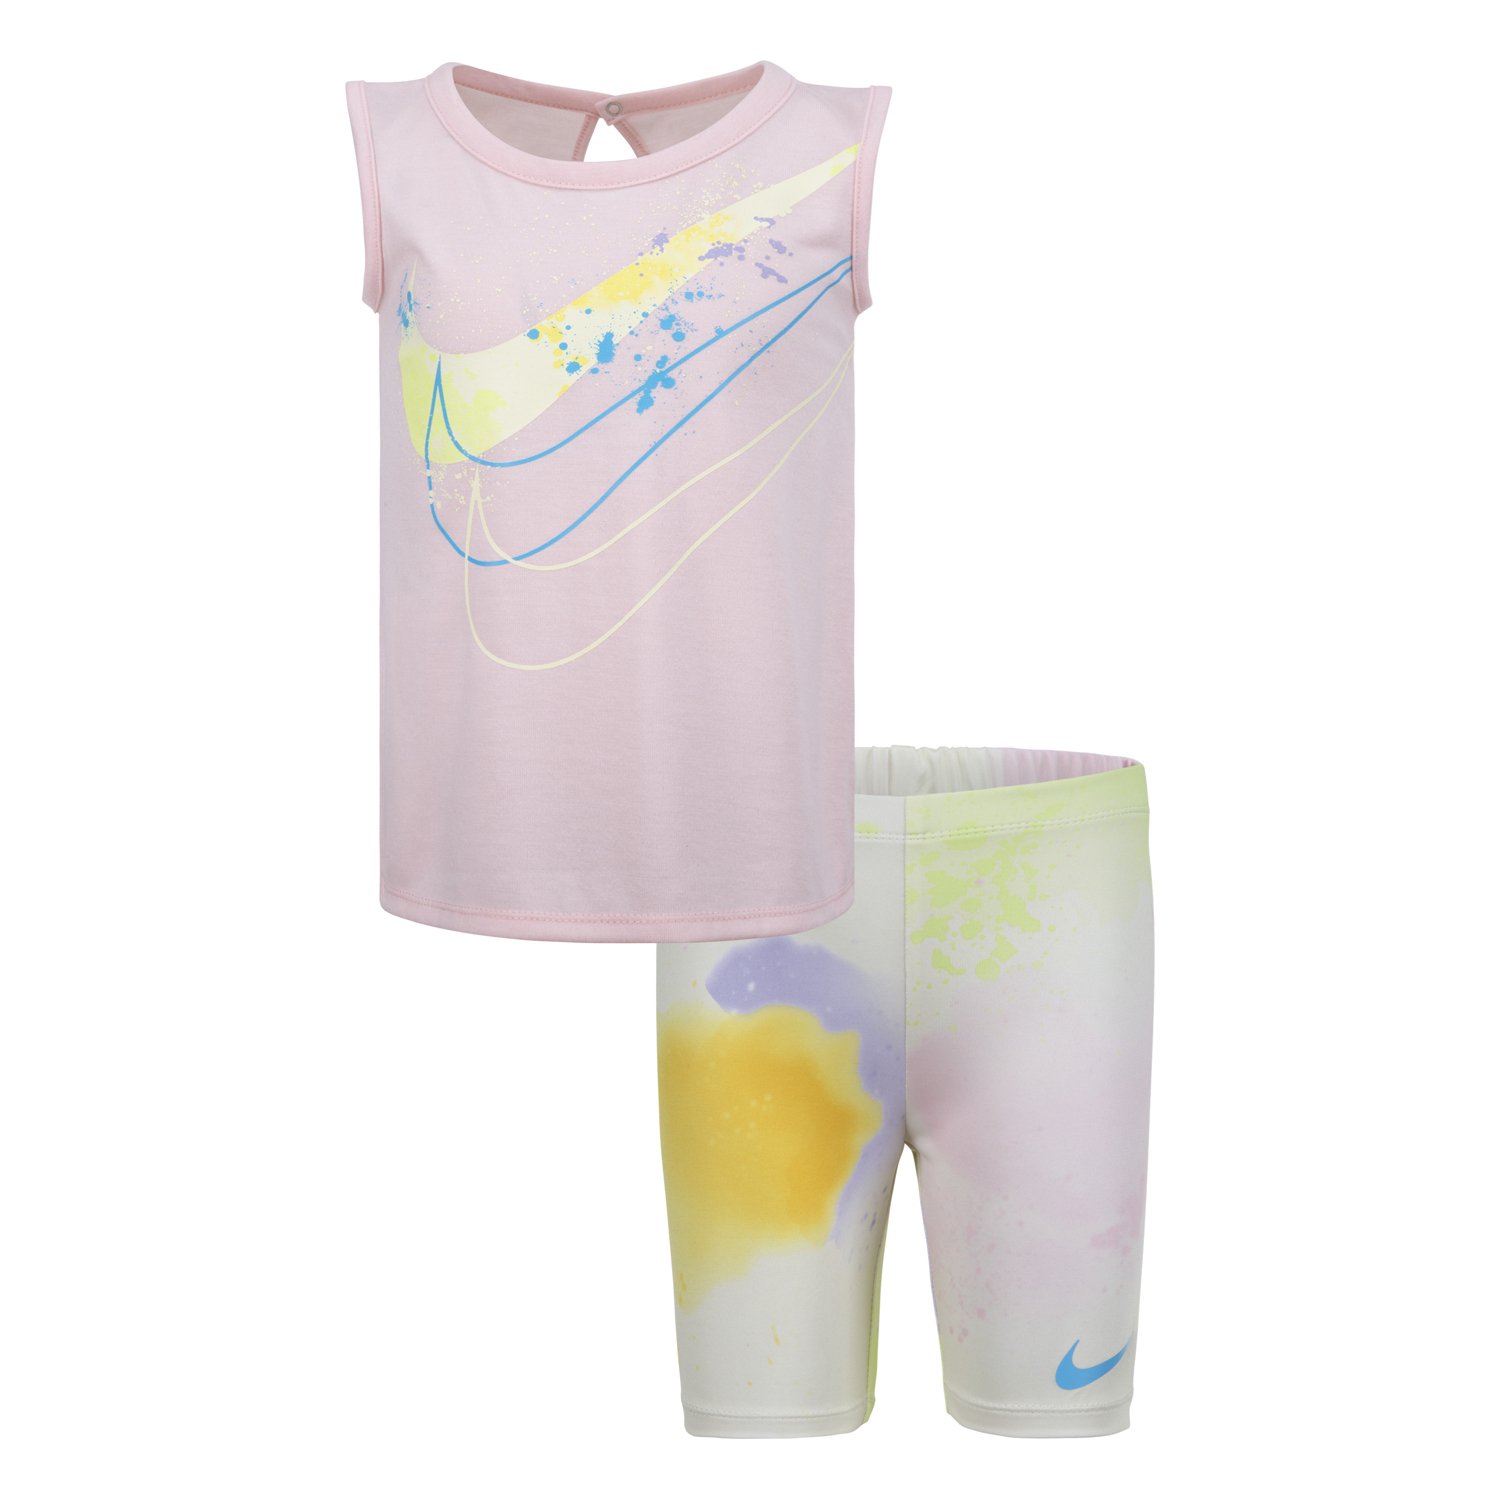 NIKE Girls' Little Kids' Nike T-Shirt and Bike Shorts Set